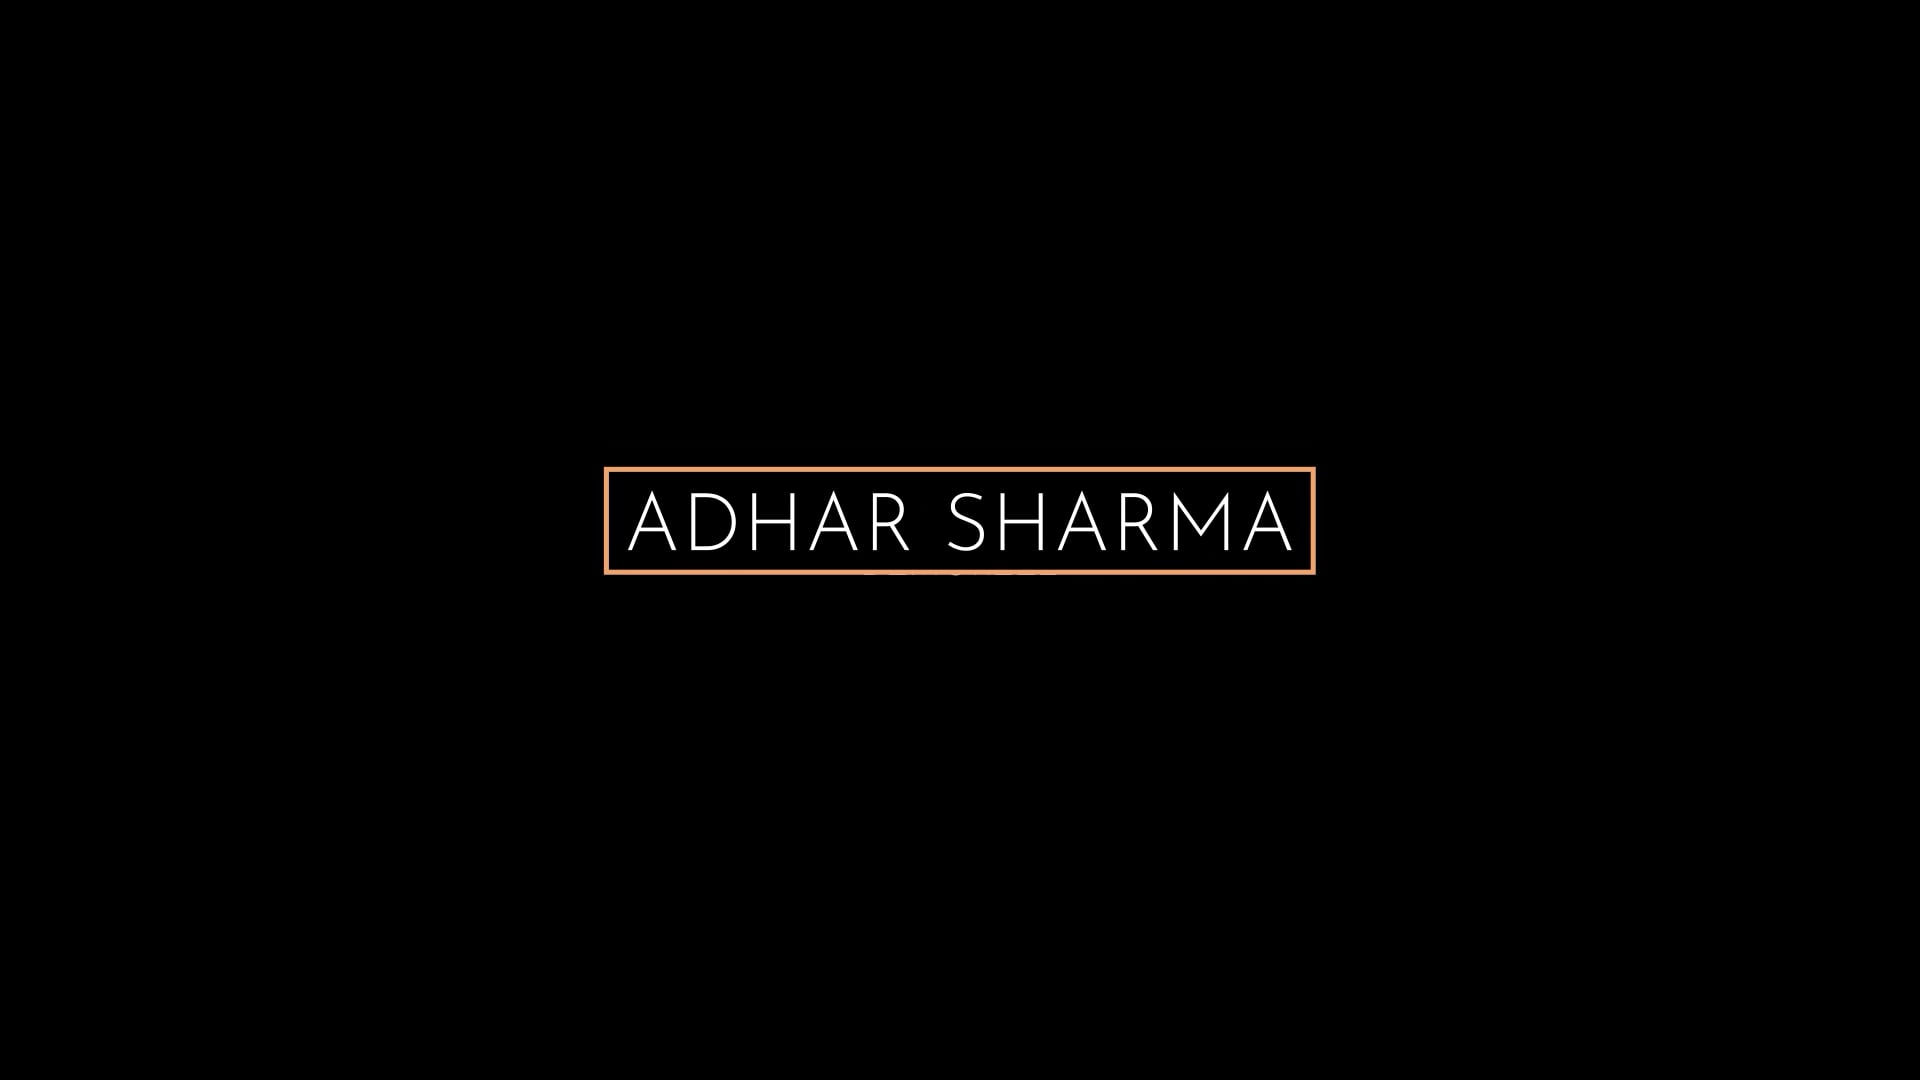 AdharSharma_Demoreel_Creative